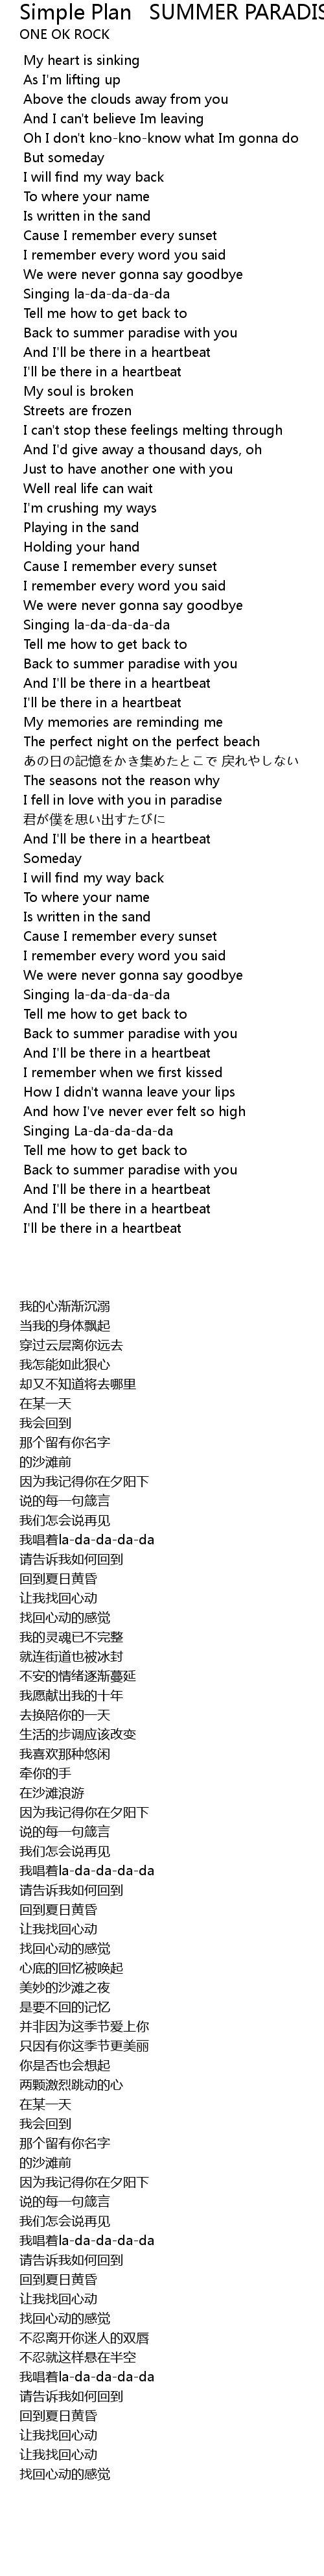 Simple Plan Summer Paradise Feat Taka From One Ok Rock Lyrics Follow Lyrics